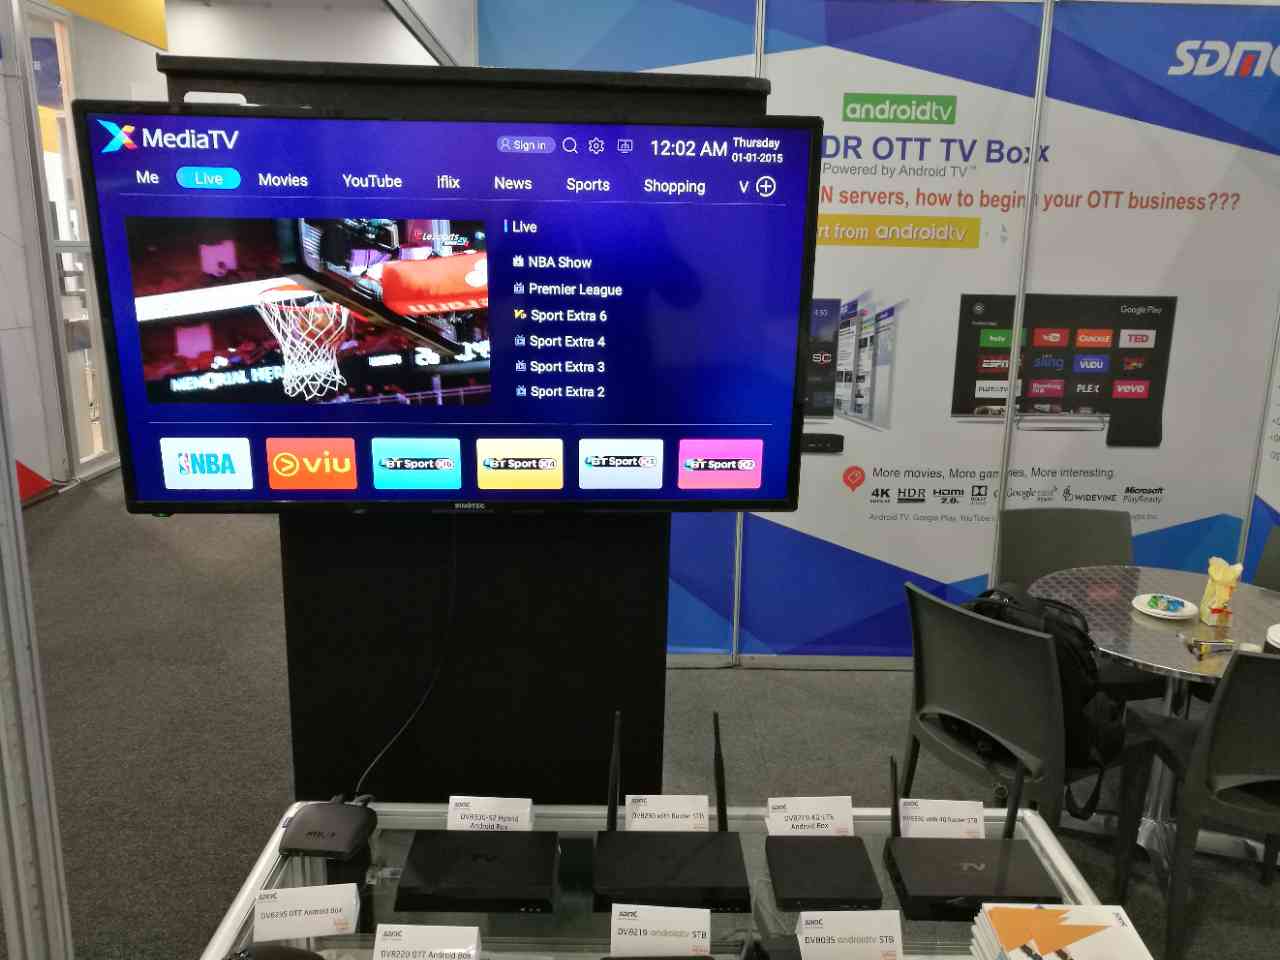 TV Box and XMediaTV Platform adopting Android TV